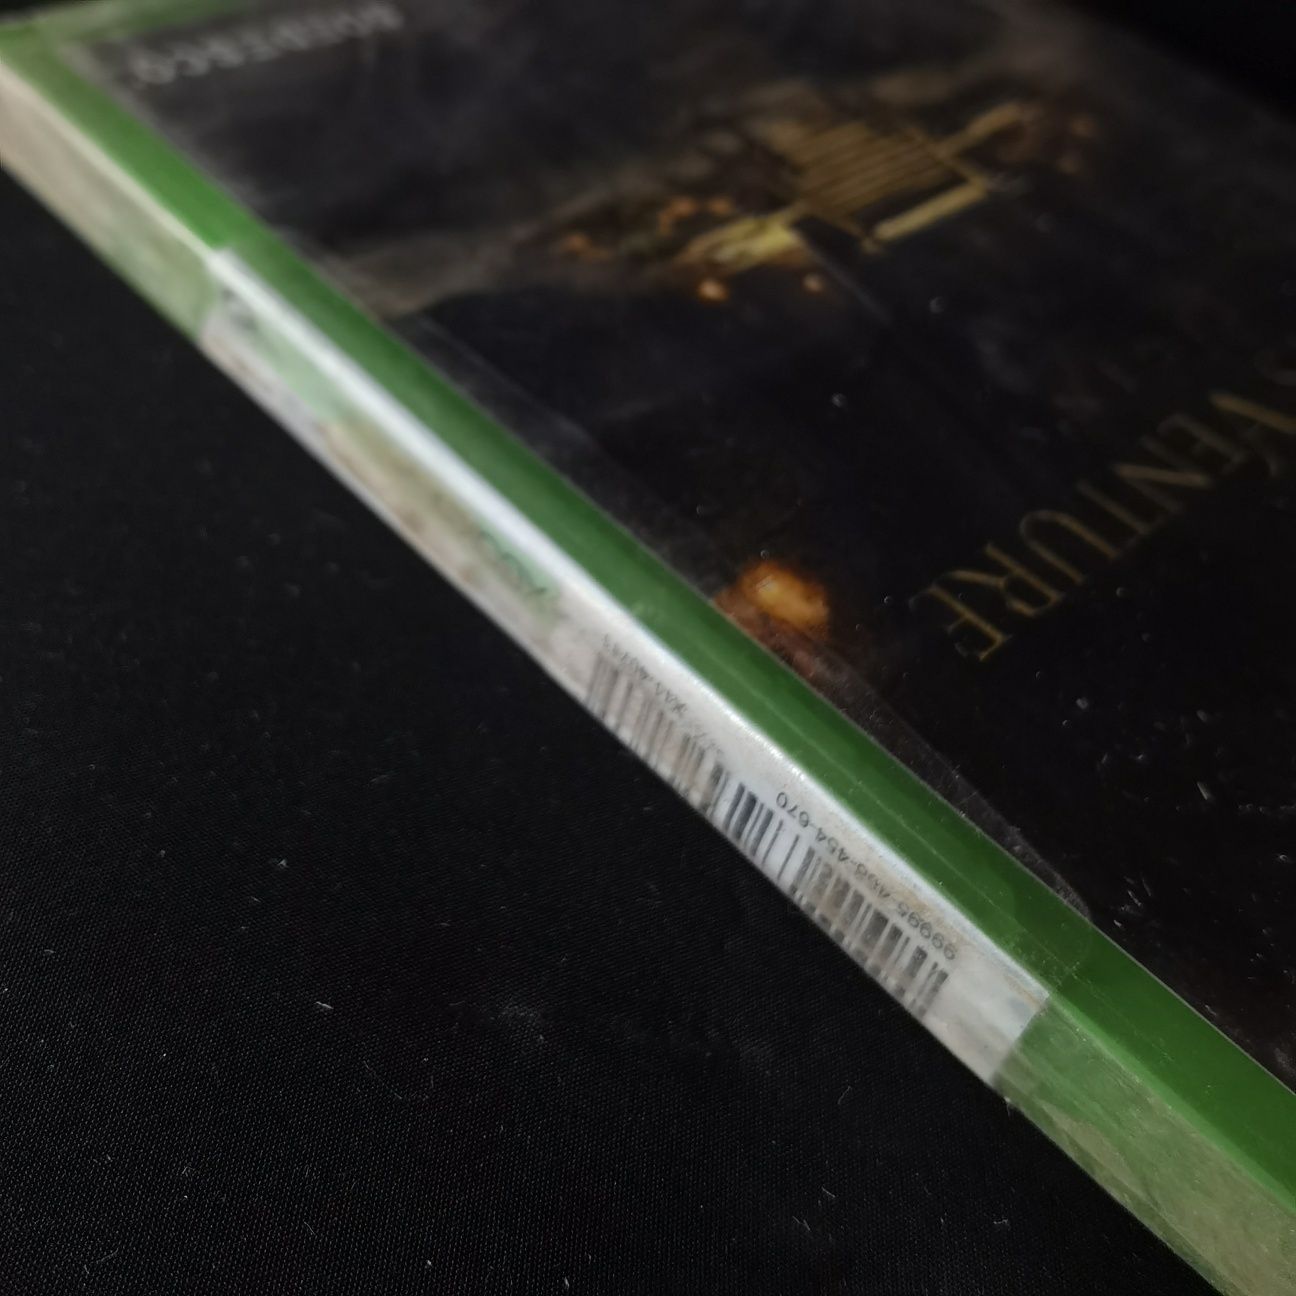 Adams Venture Origins Xbox One Polska edycja Folia